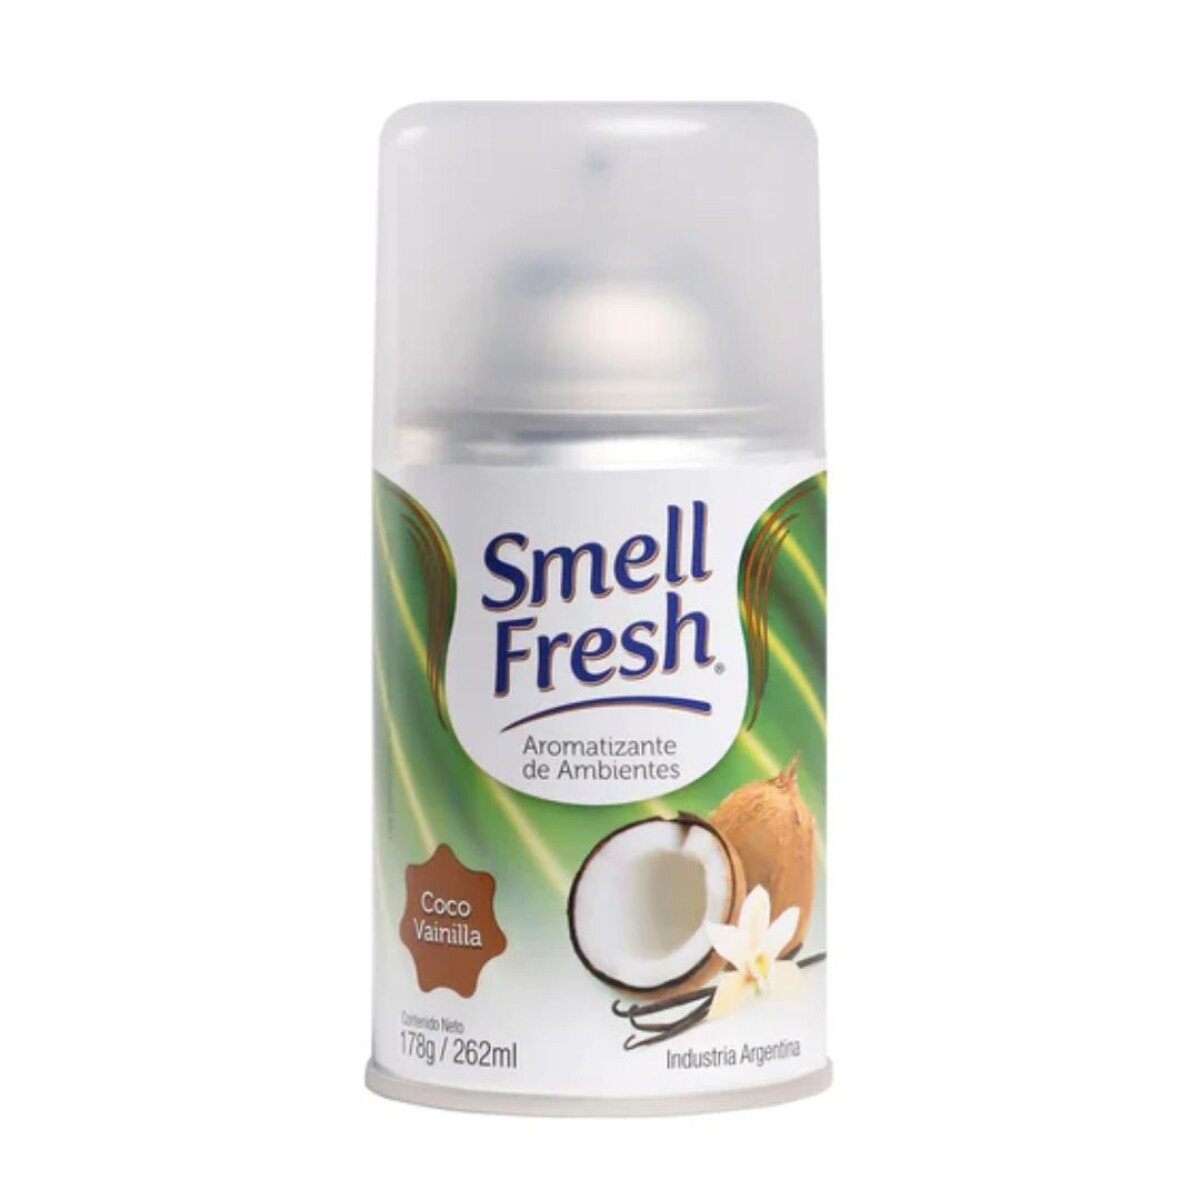 Aromatizante Smell Fresh - Coco Vainilla 